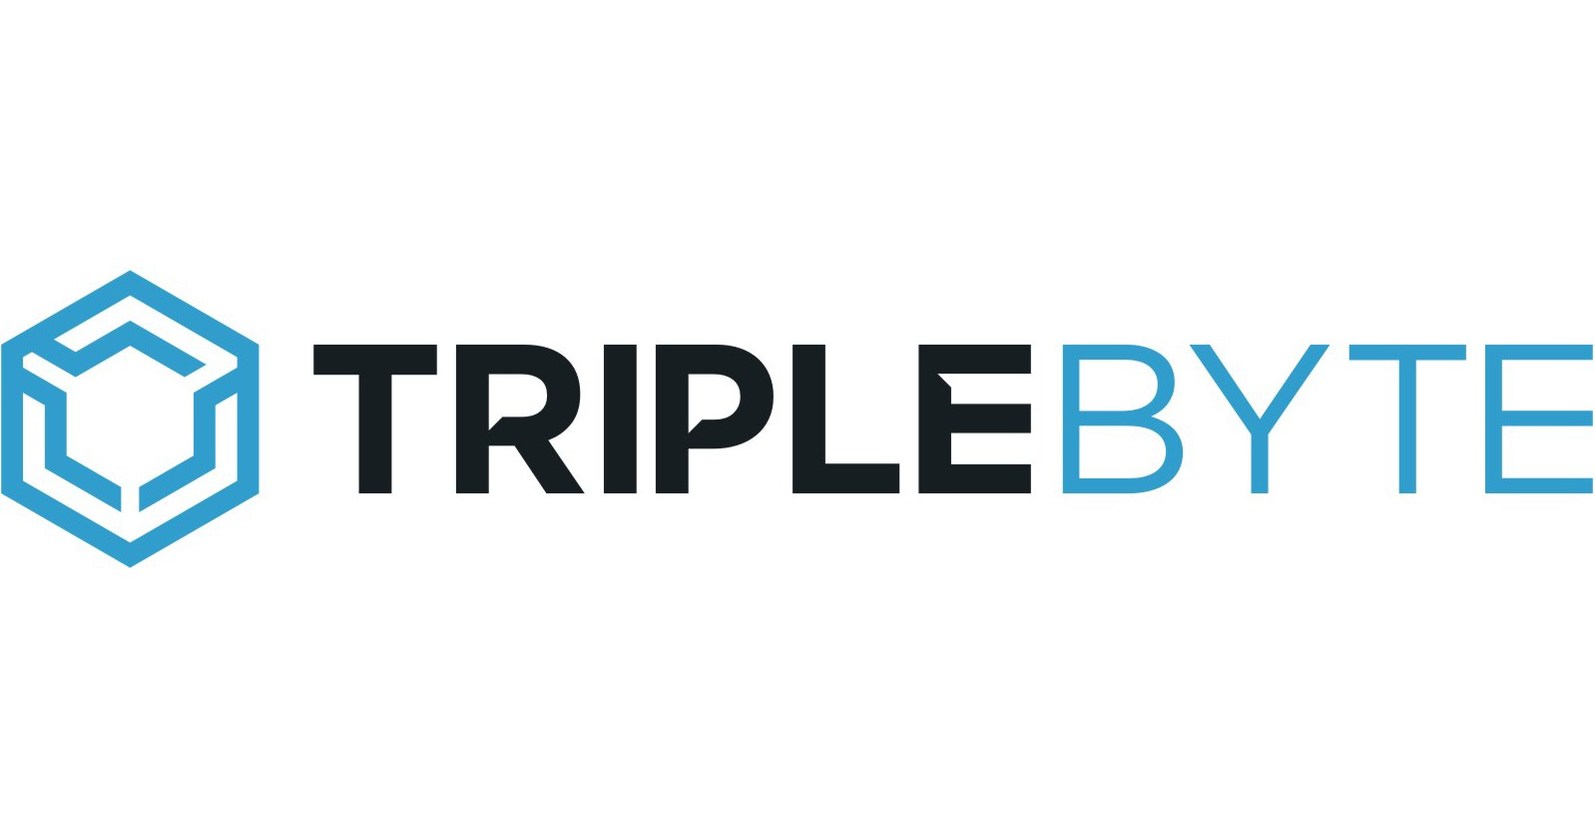 Triplebyte Technical Aptitude Test Required